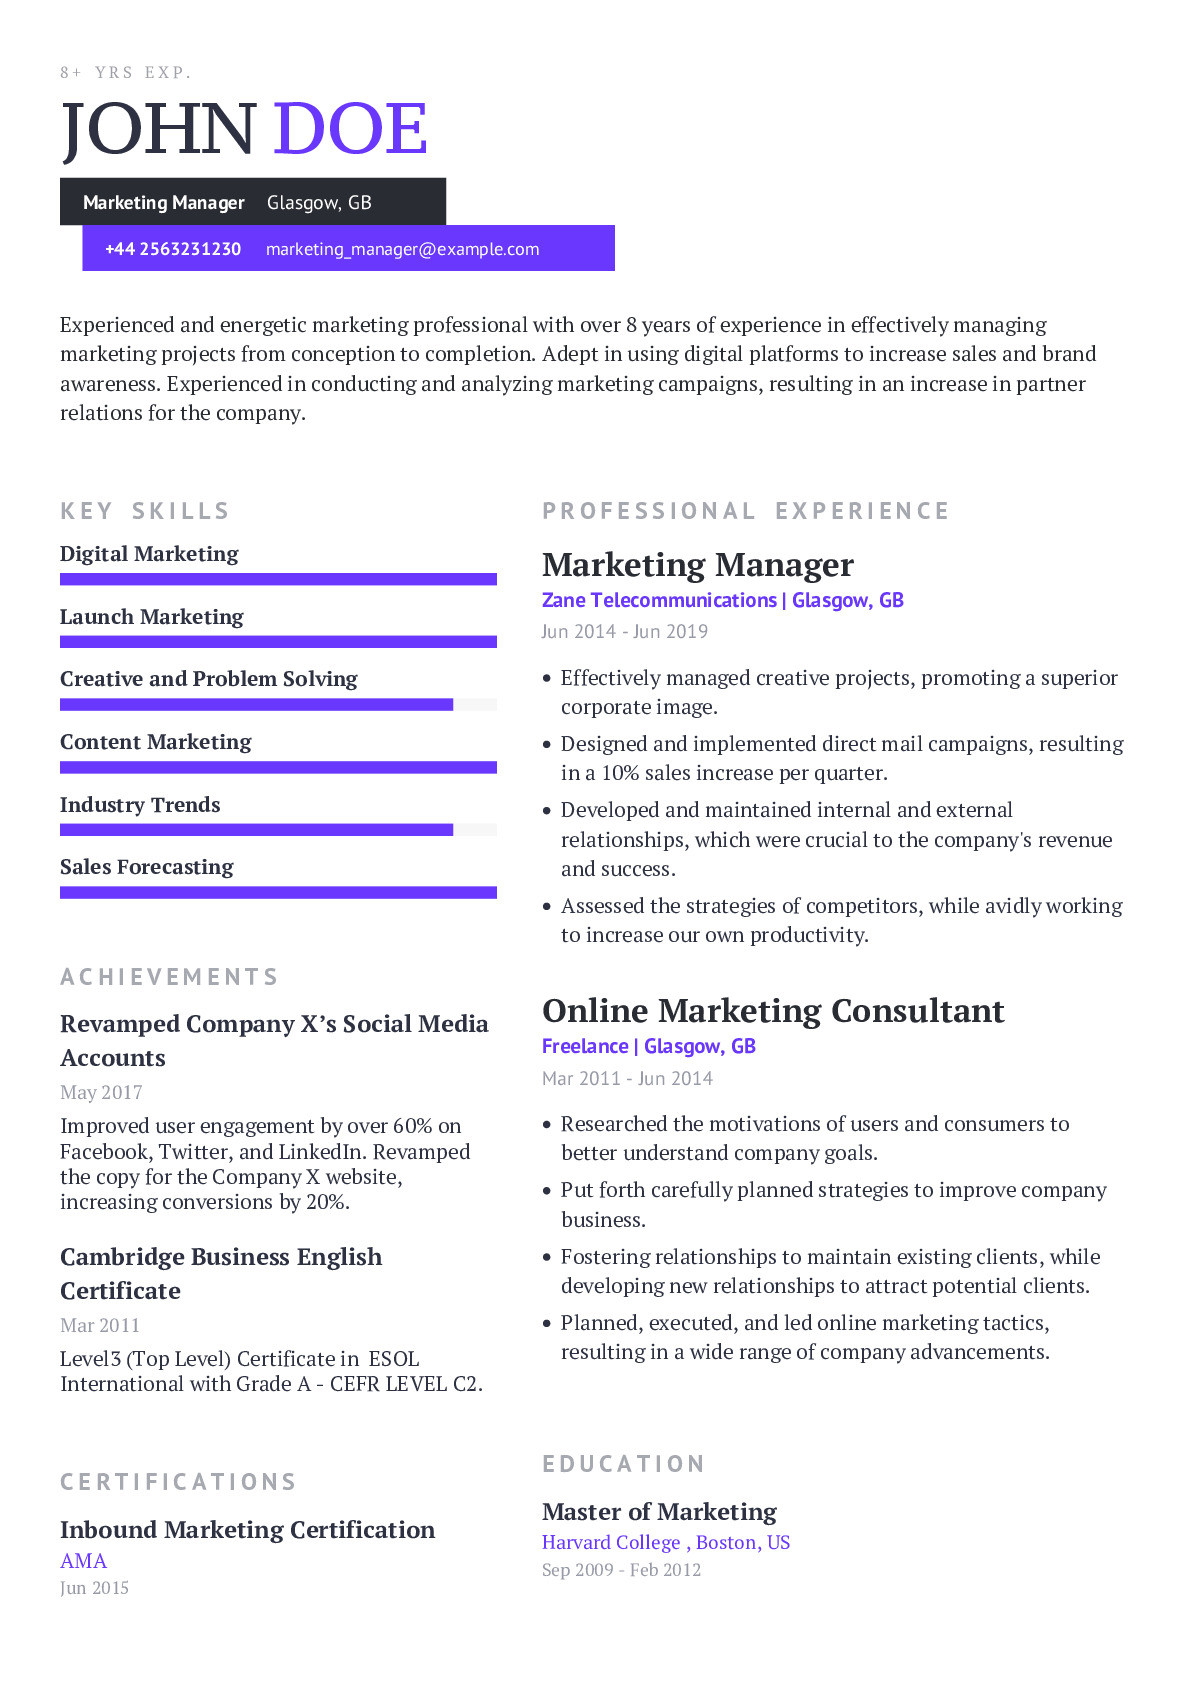 Sample Resume Achievement for Marketing Manager Marketing Manager Resume Example with Pre-written Content Craftmycv